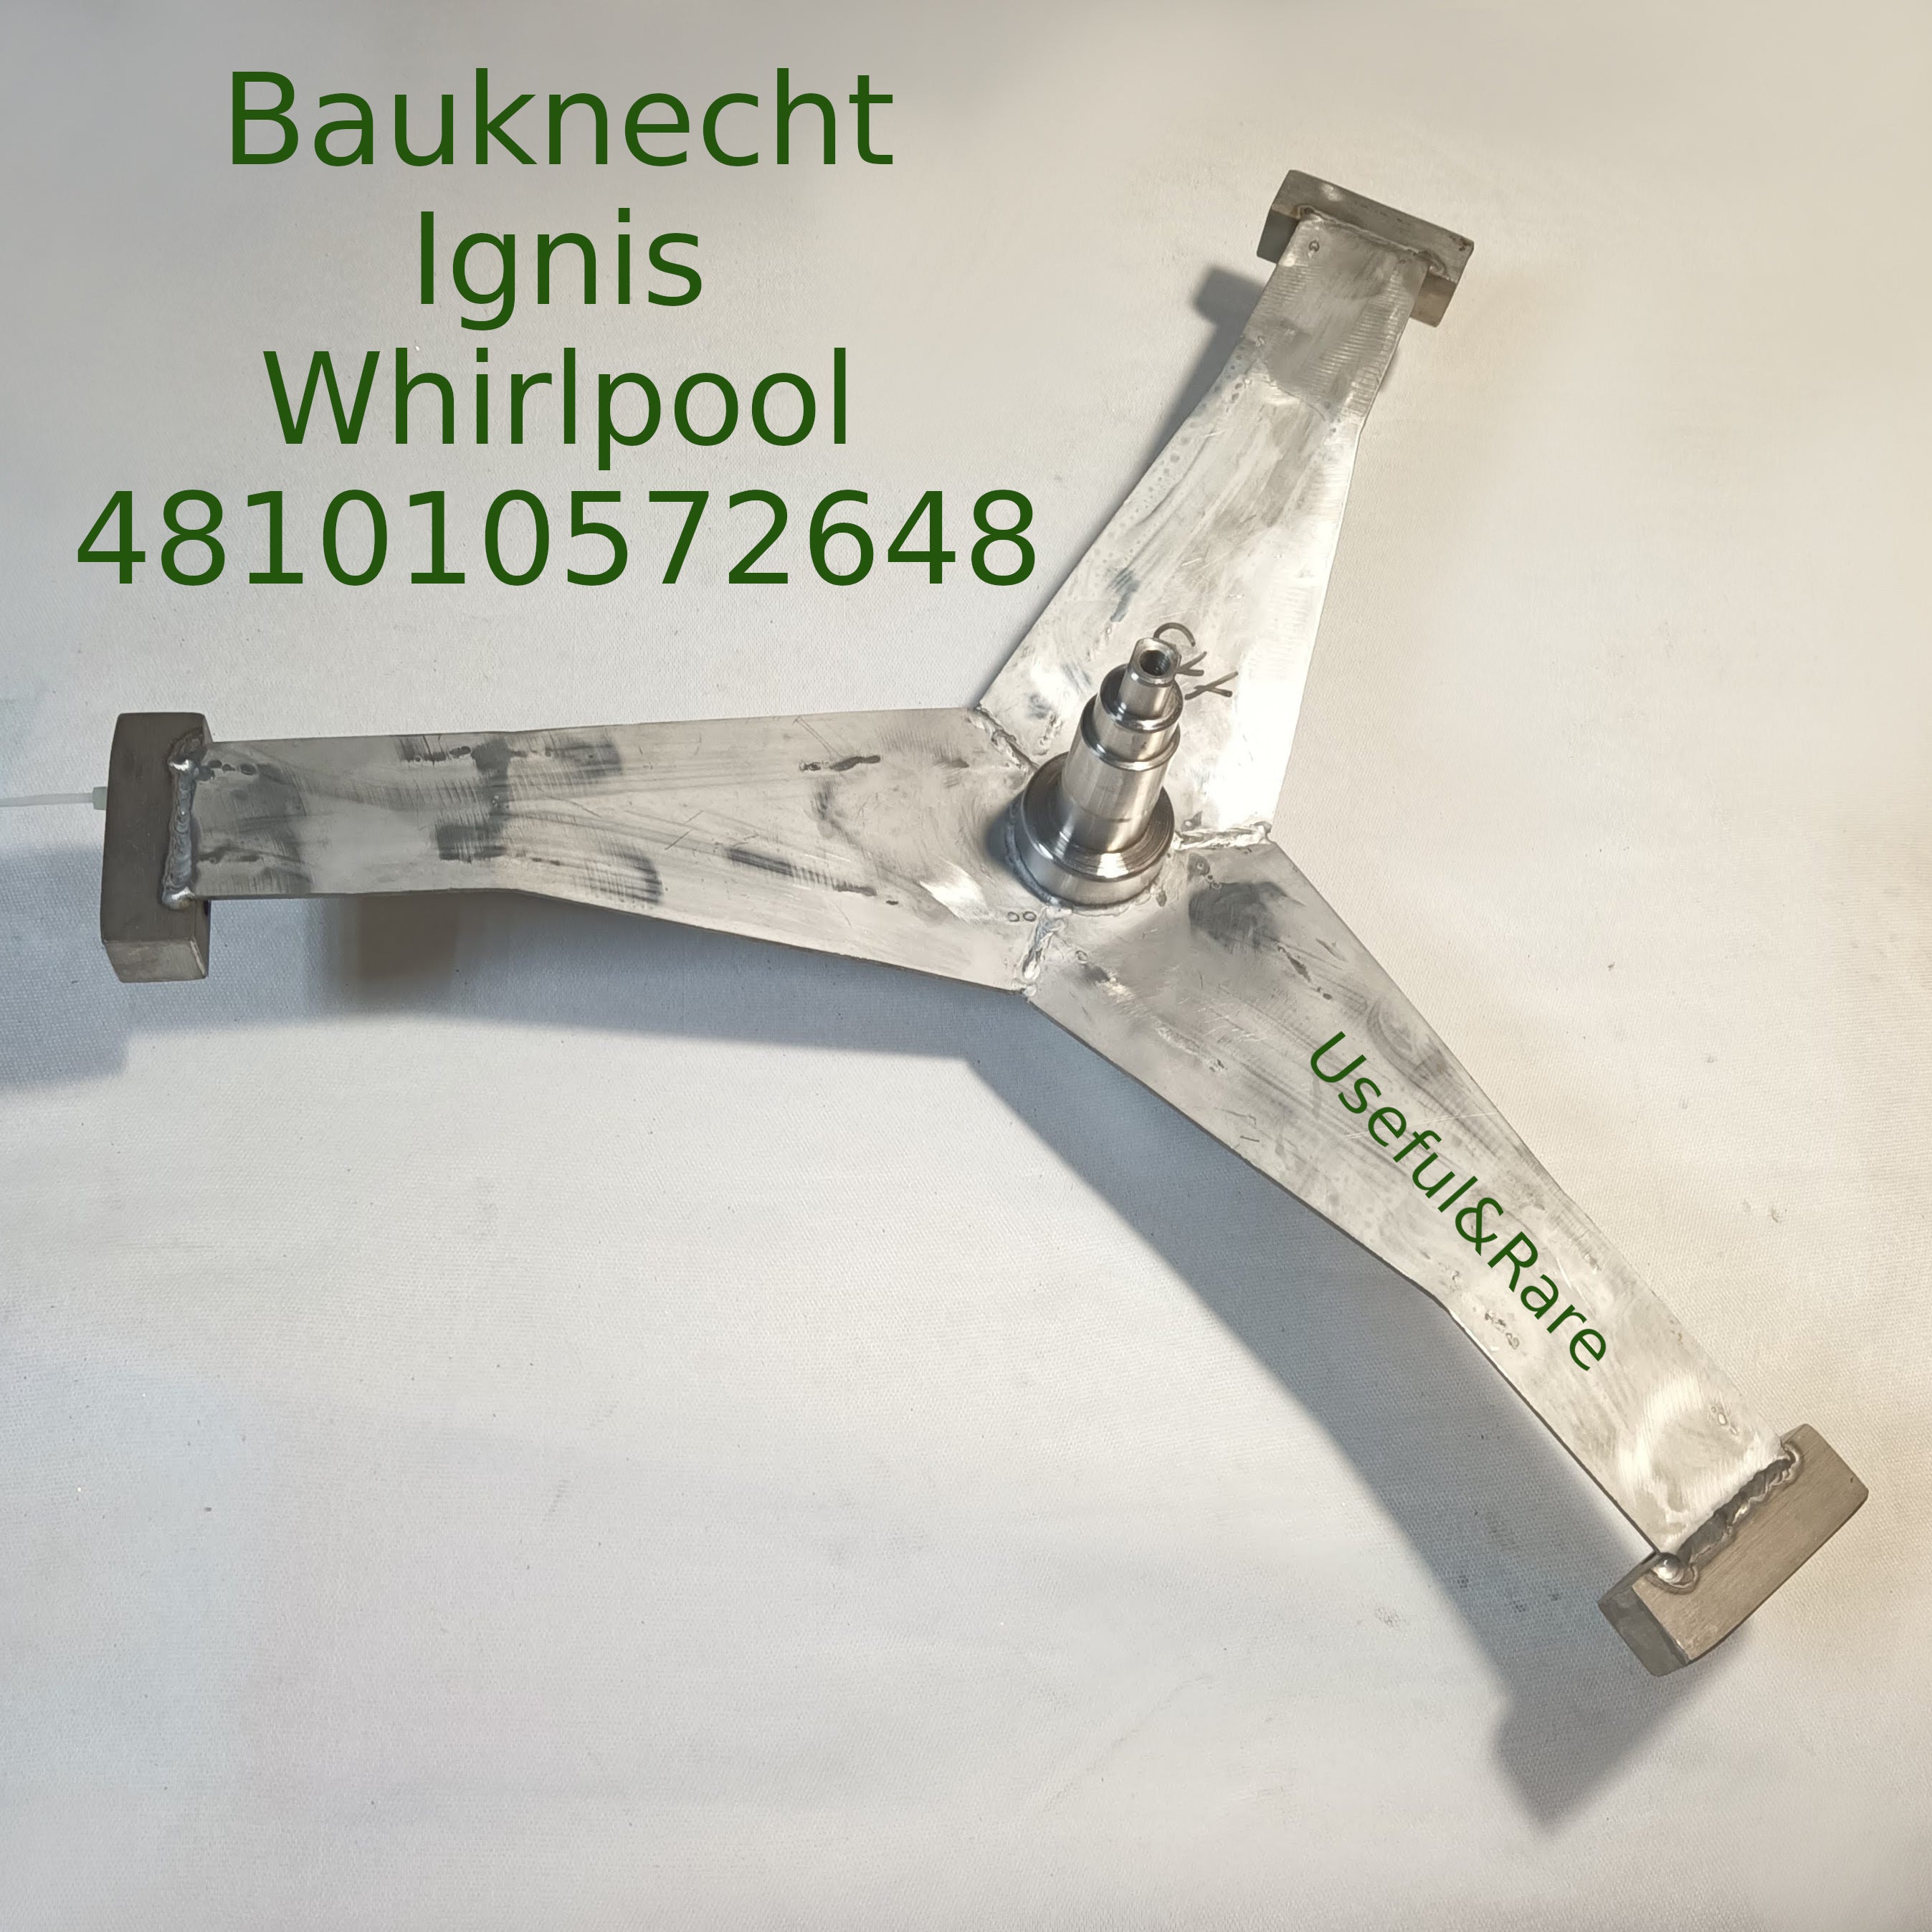 DL-pro 481241838127 - Teglia per forno Whirlpool Bauknecht Ignis 445 x 375